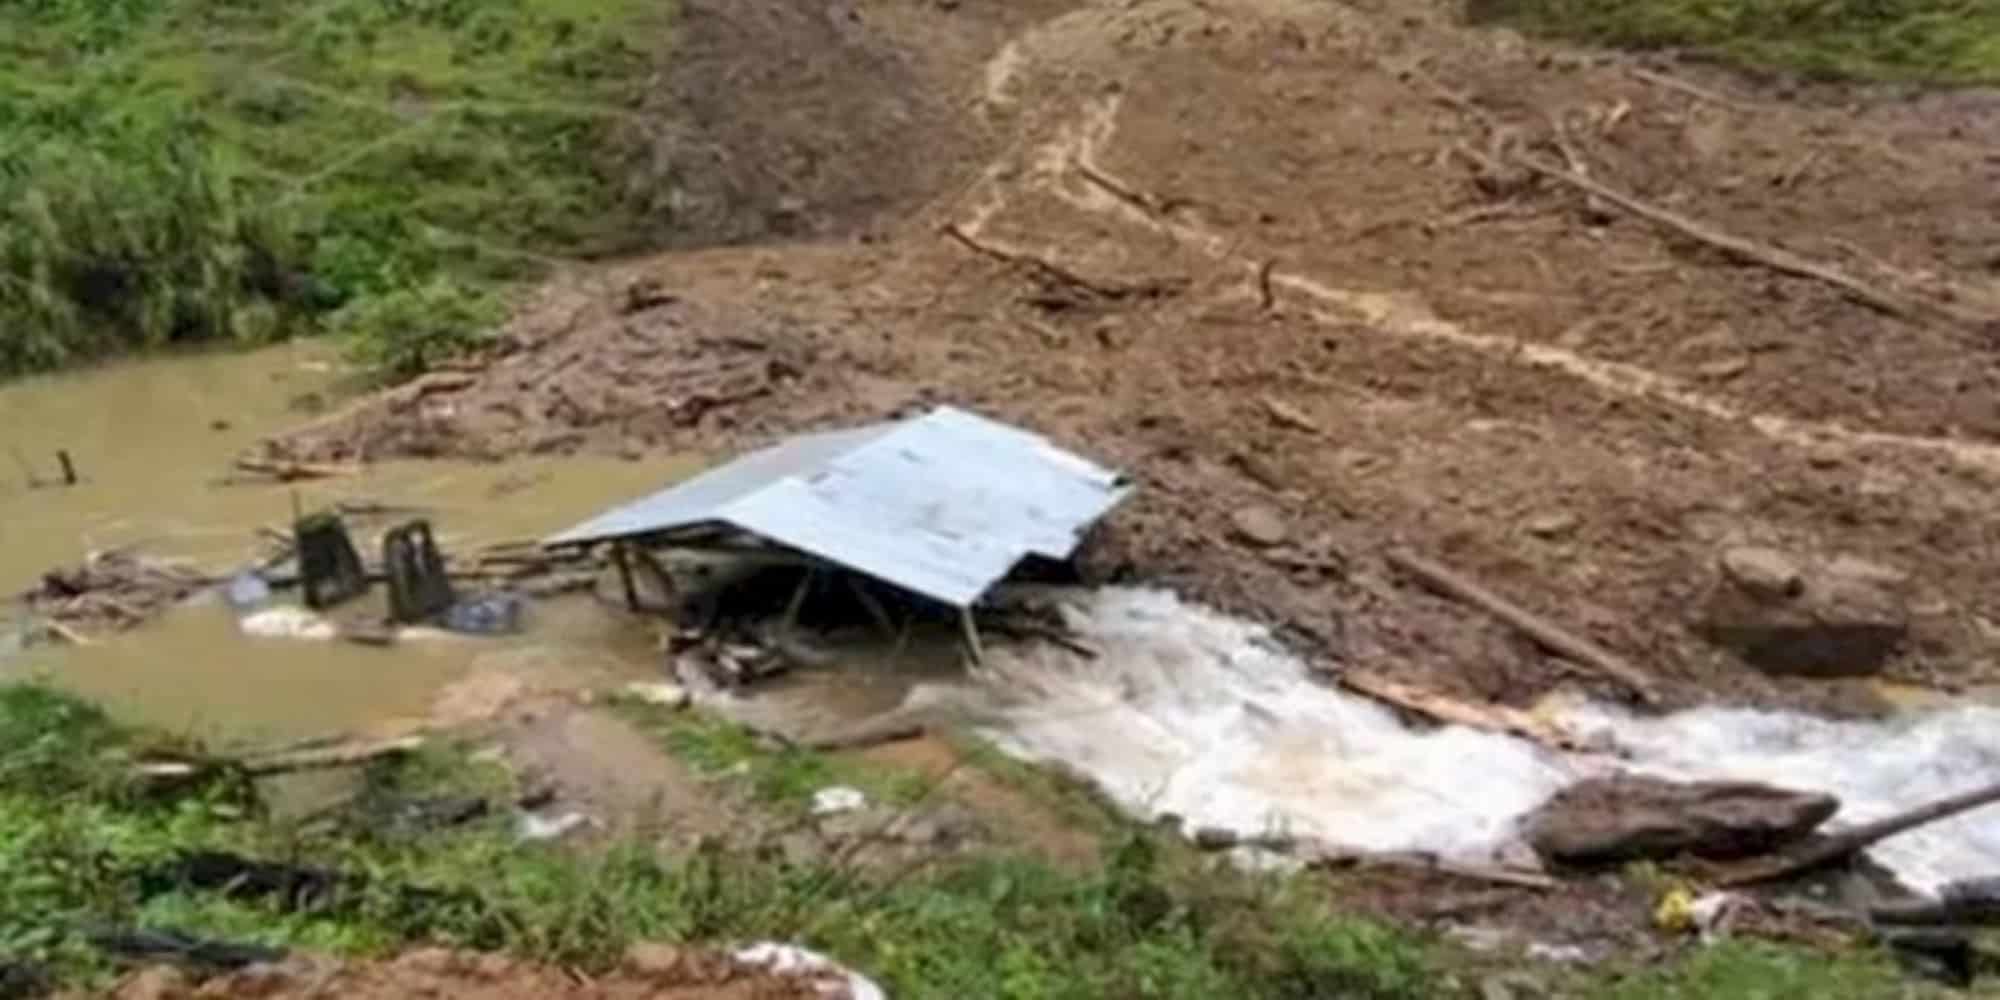 kolombia - Τουλάχιστον δώδεκα νεκροί και δύο αγνοούμενοι μετά τον χείμαρρο λάσπης που έπληξε μεταλλείο στην Κολομβία (εικόνες & βίντεο)